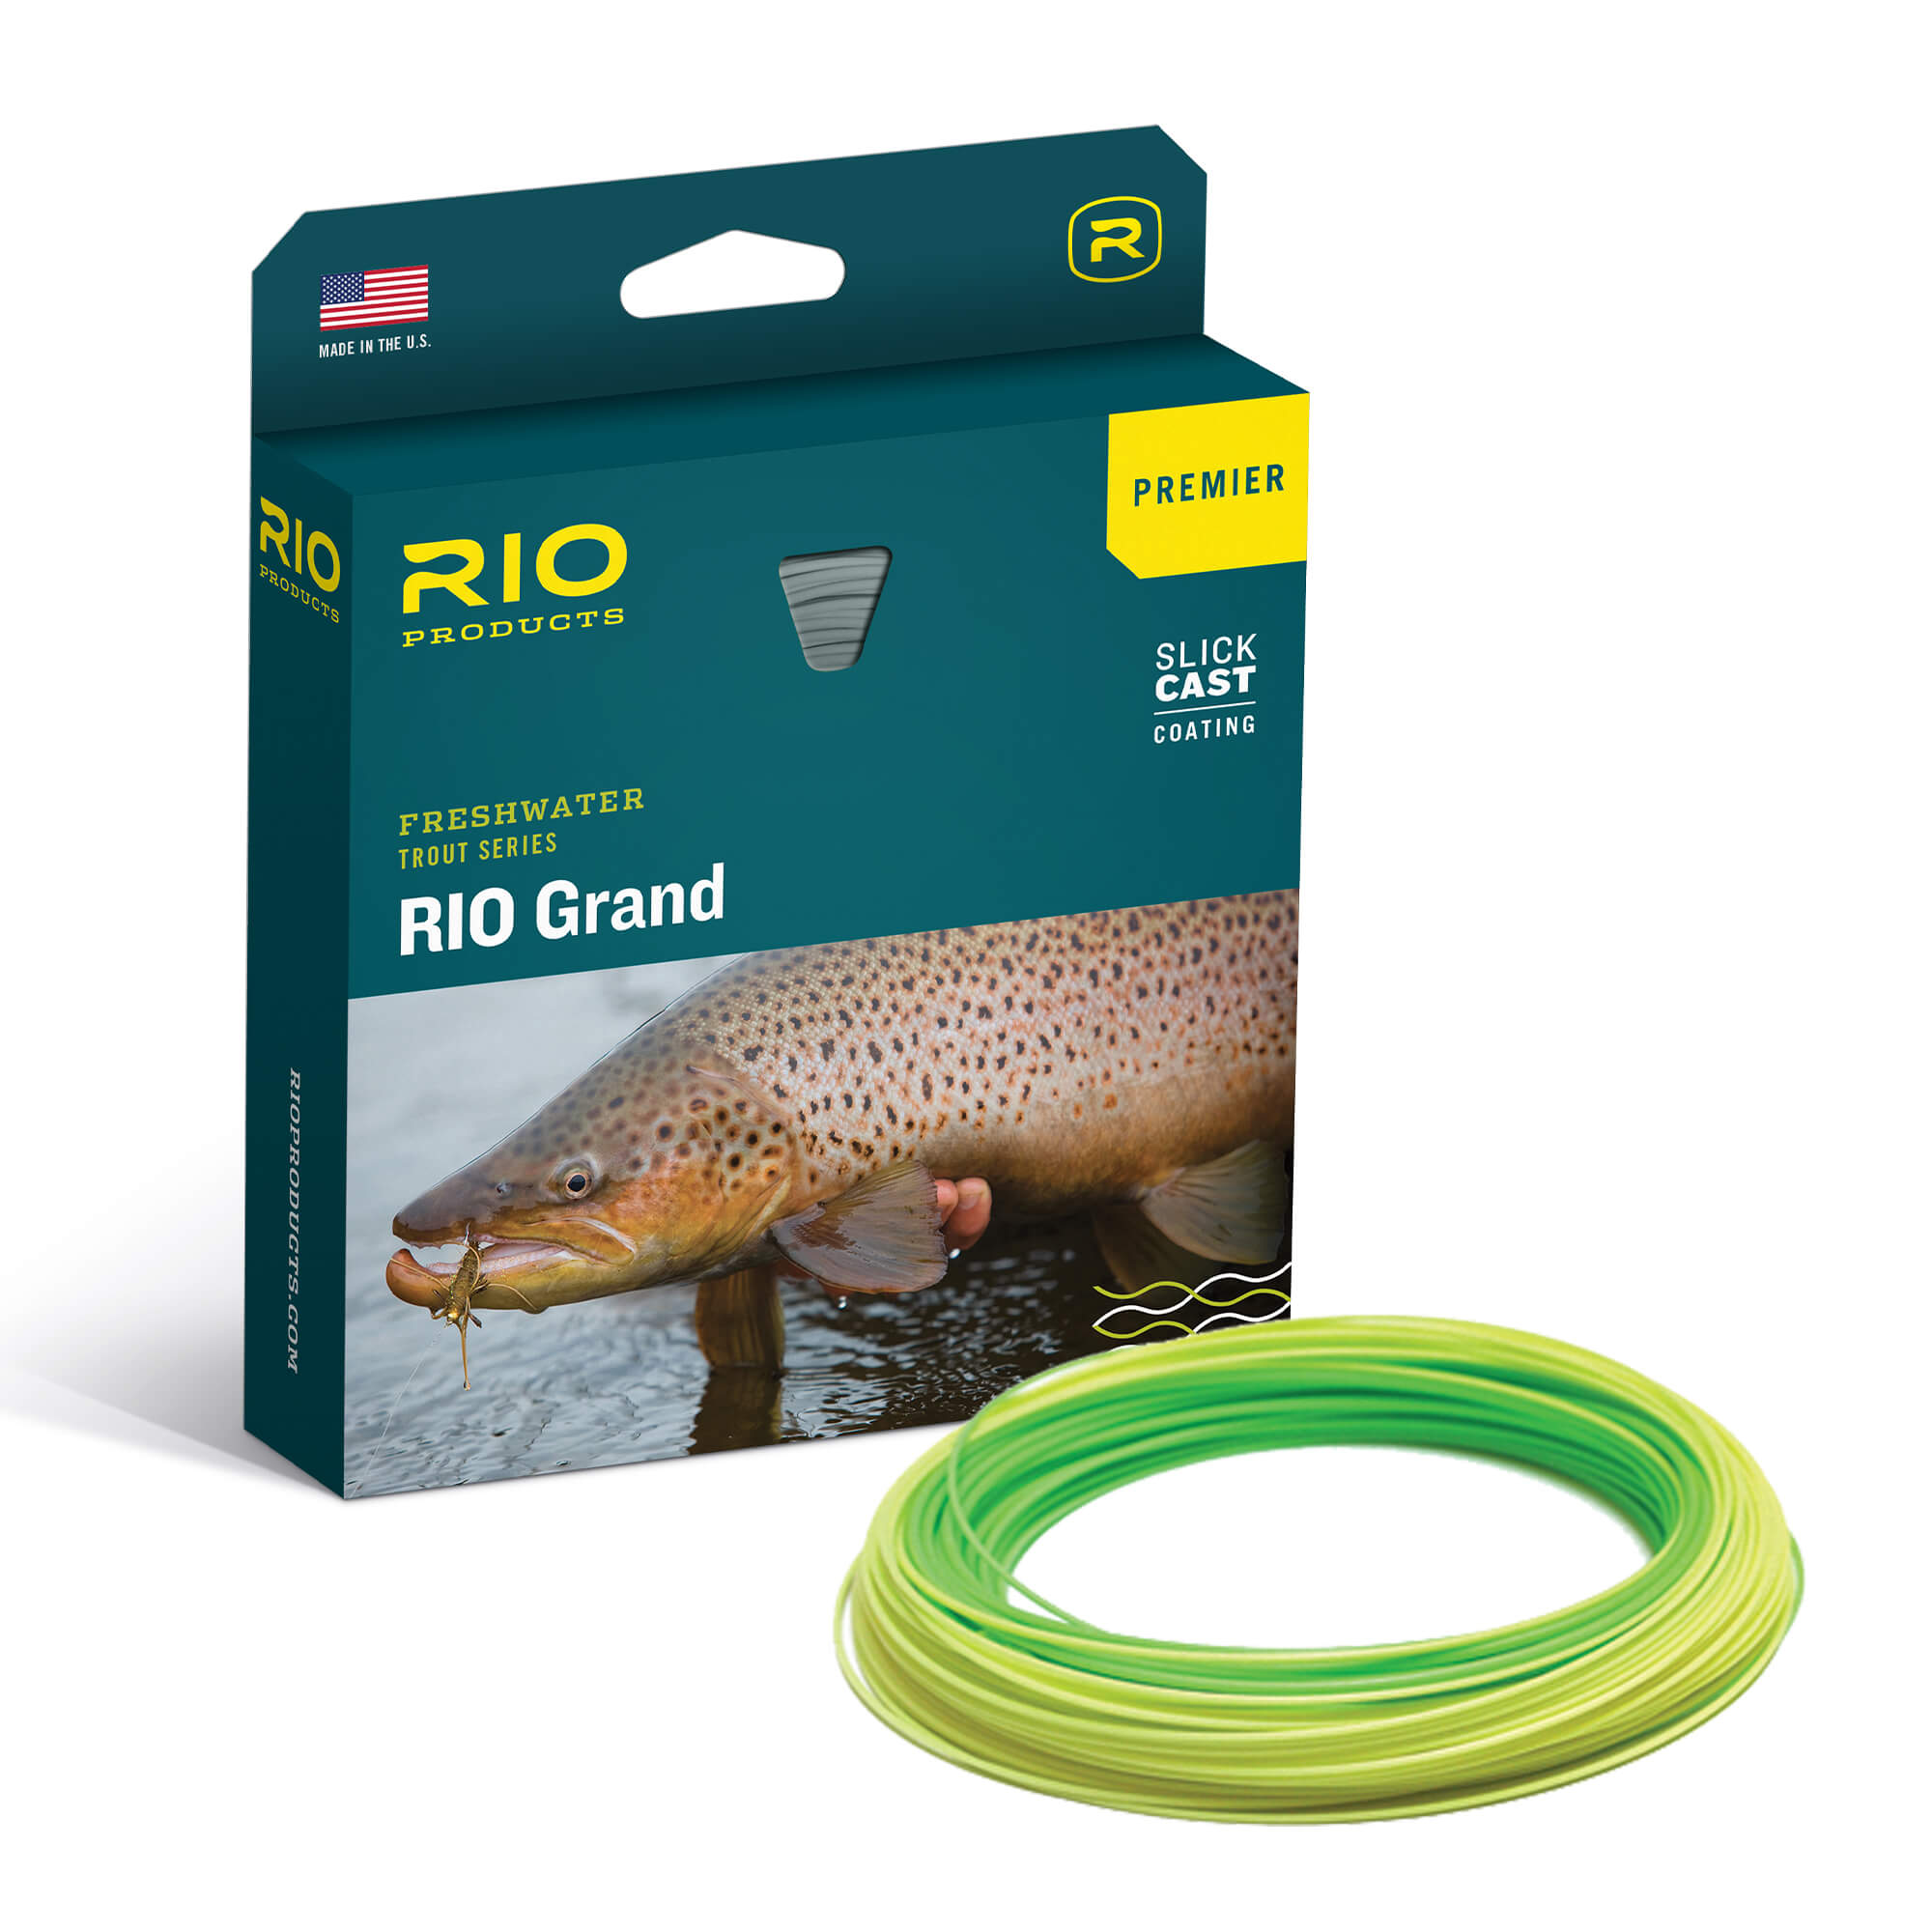 https://www.guideflyfishing.co.uk/wp-content/uploads/2020/06/RIO-SLICKCAST-GRAND-PREMIER-FLY-LINE-BOX.jpg